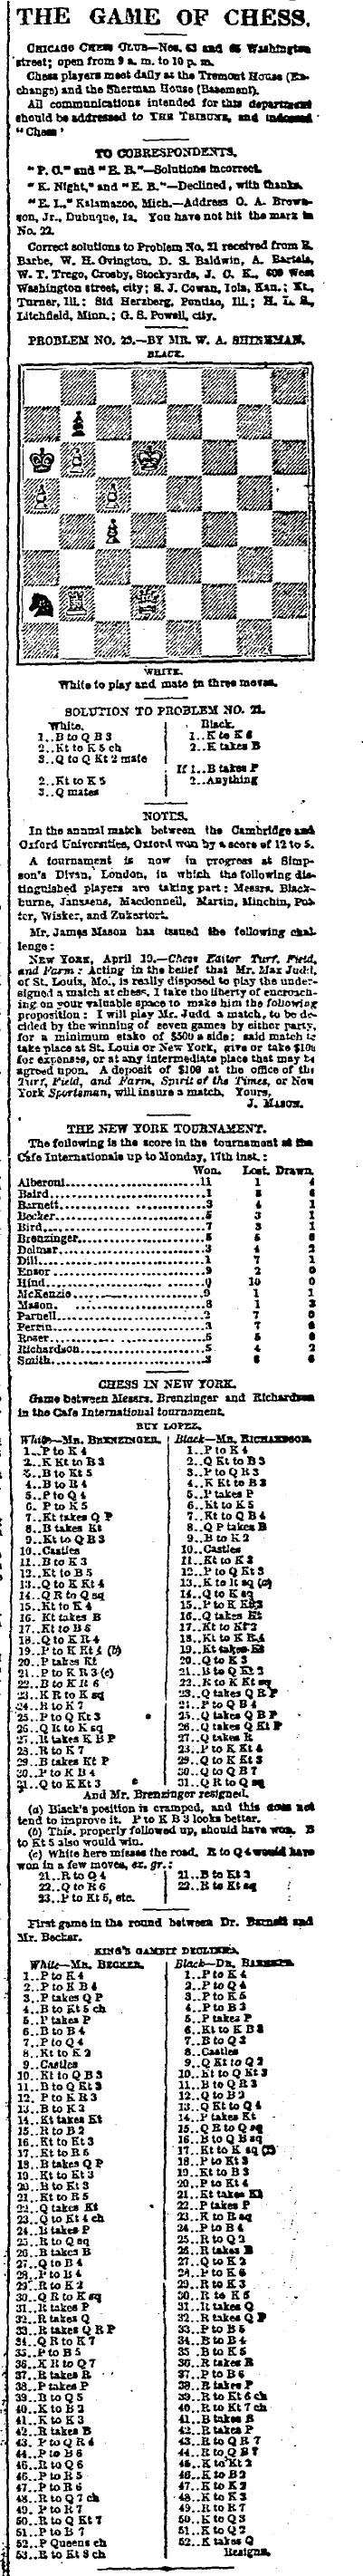 1876.04.23-01 Chicago Tribune.jpg